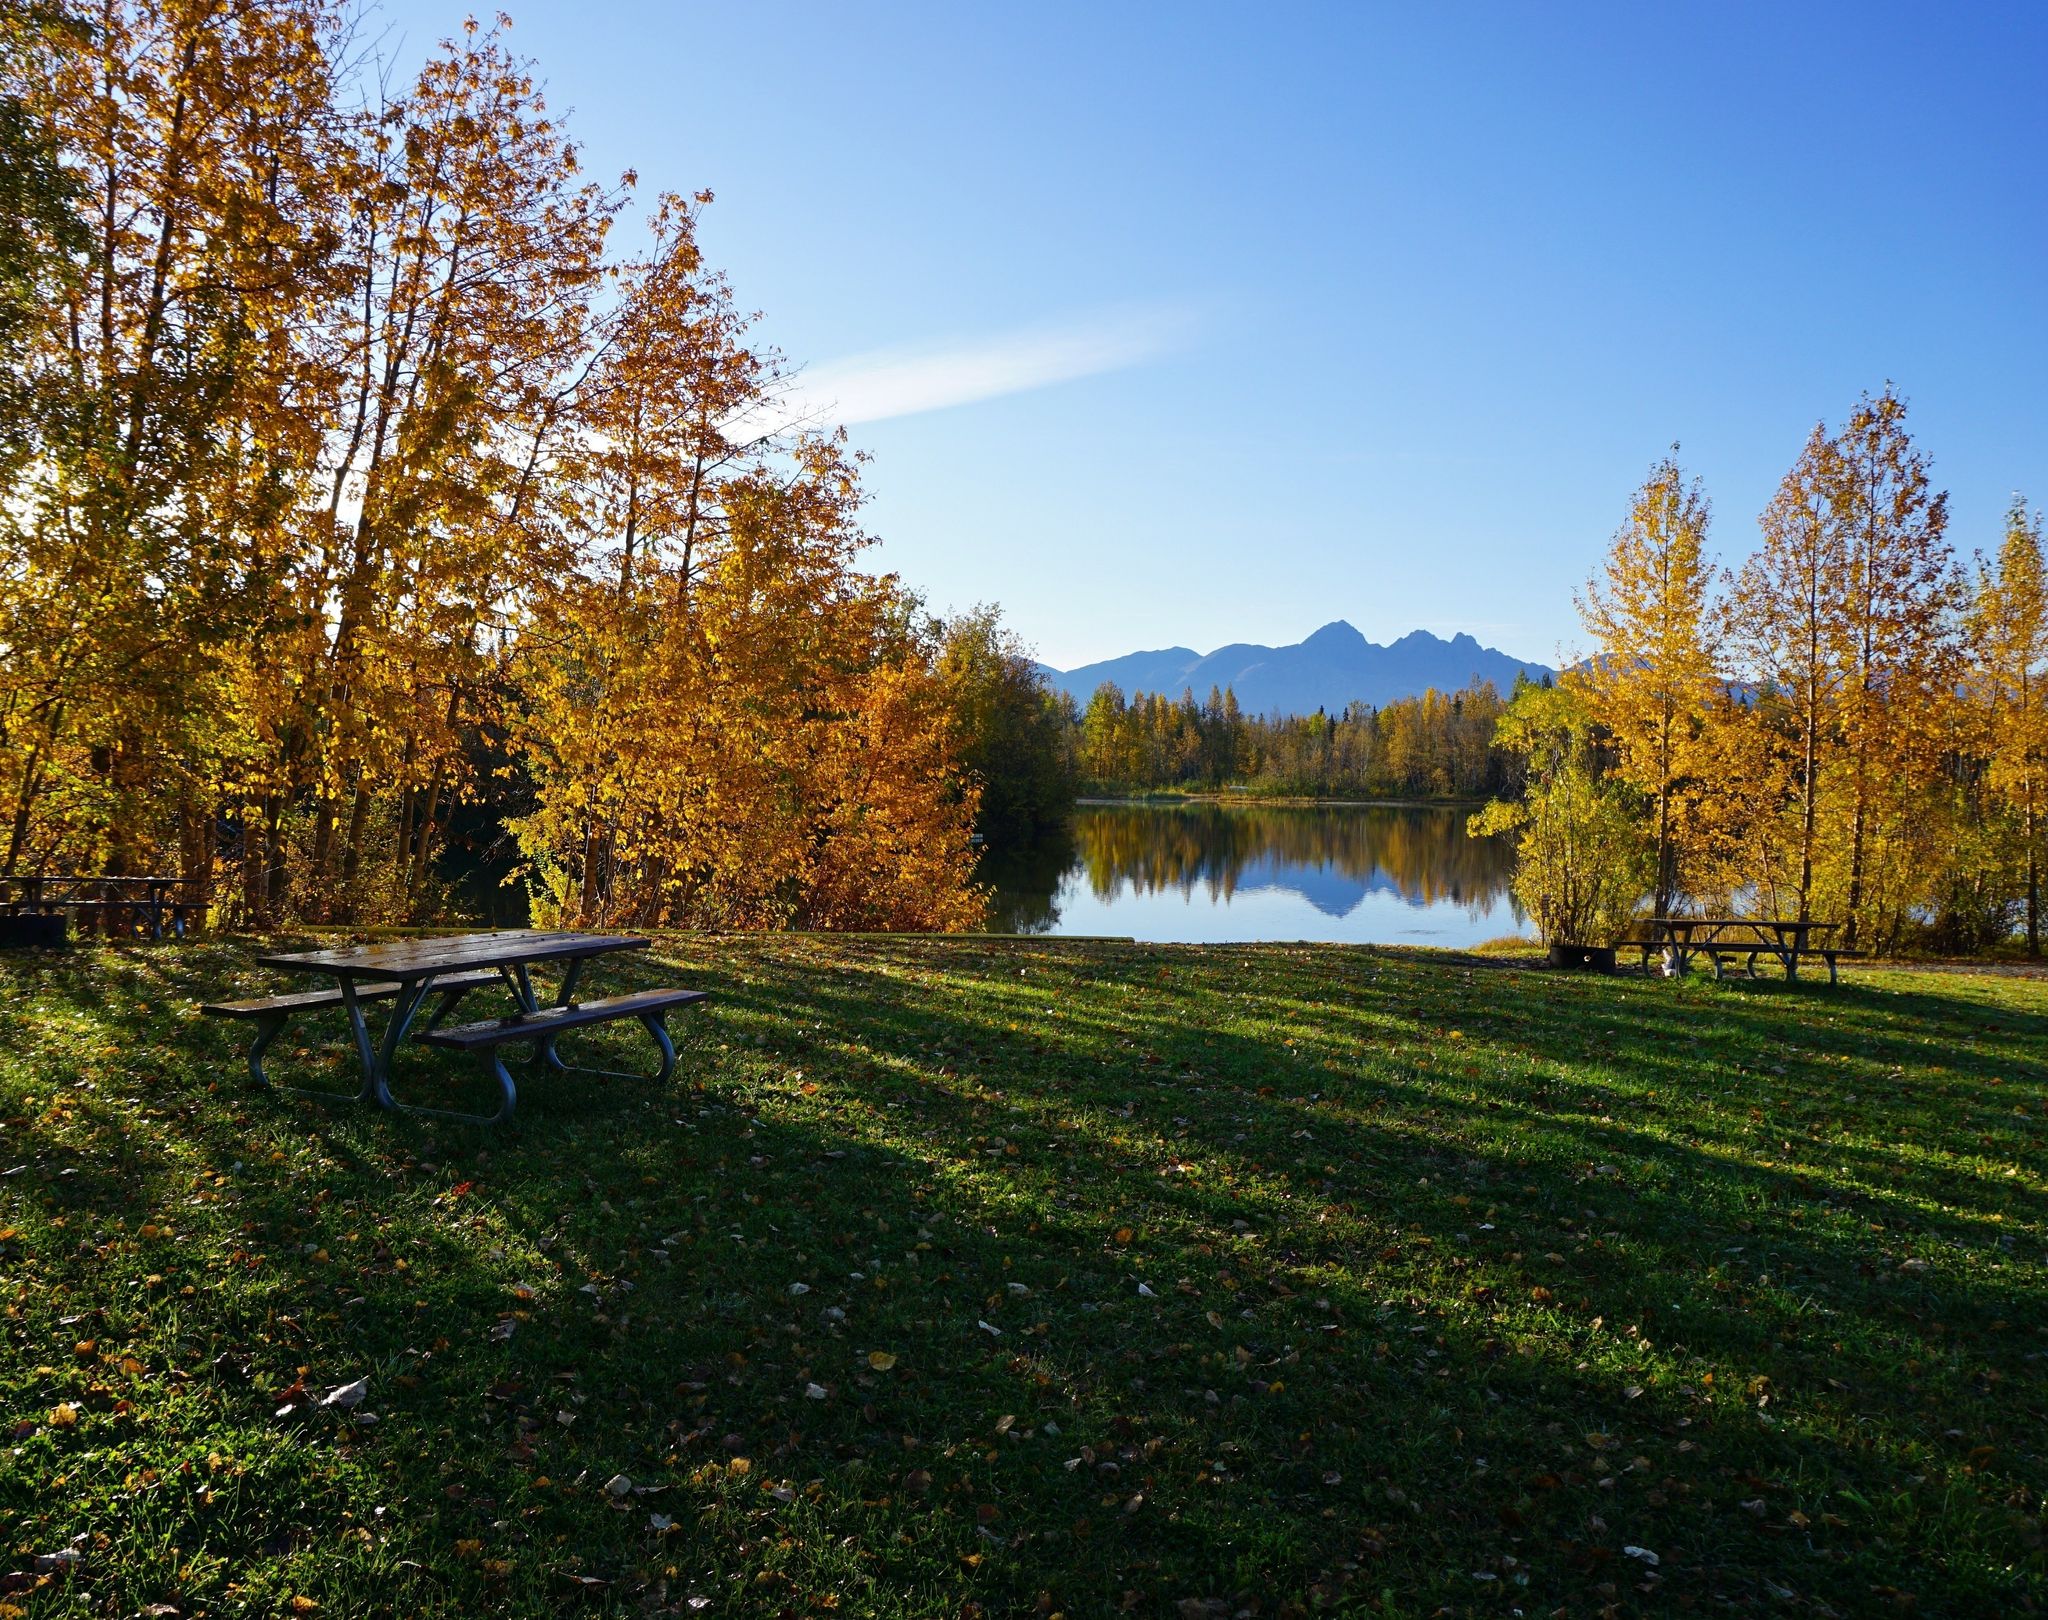 Finger Lake State Recreation Site